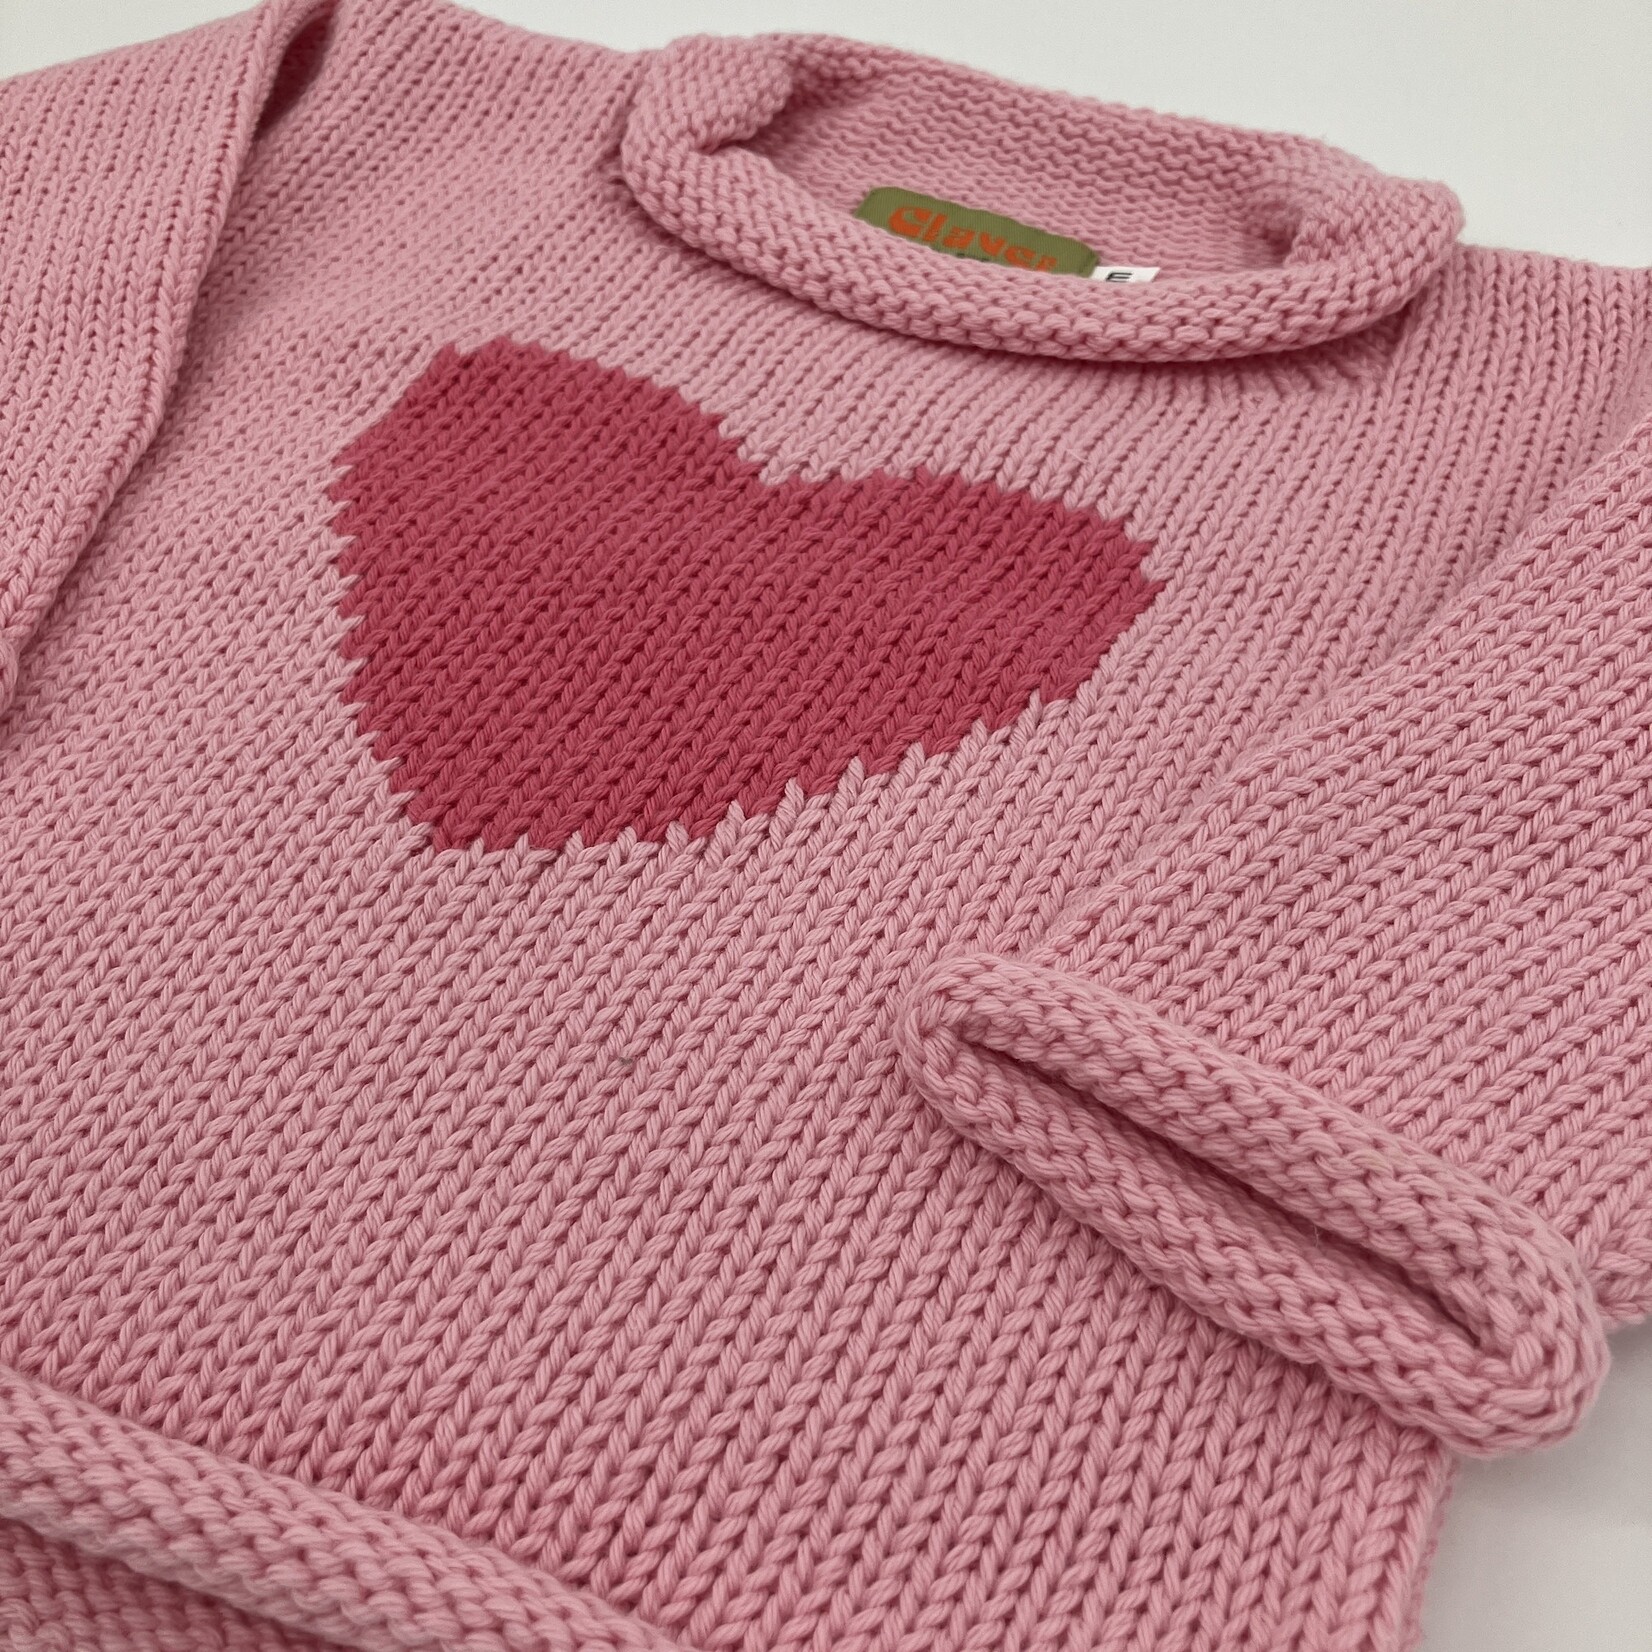 ACVISA/CLAVER Pink Heart Sweater